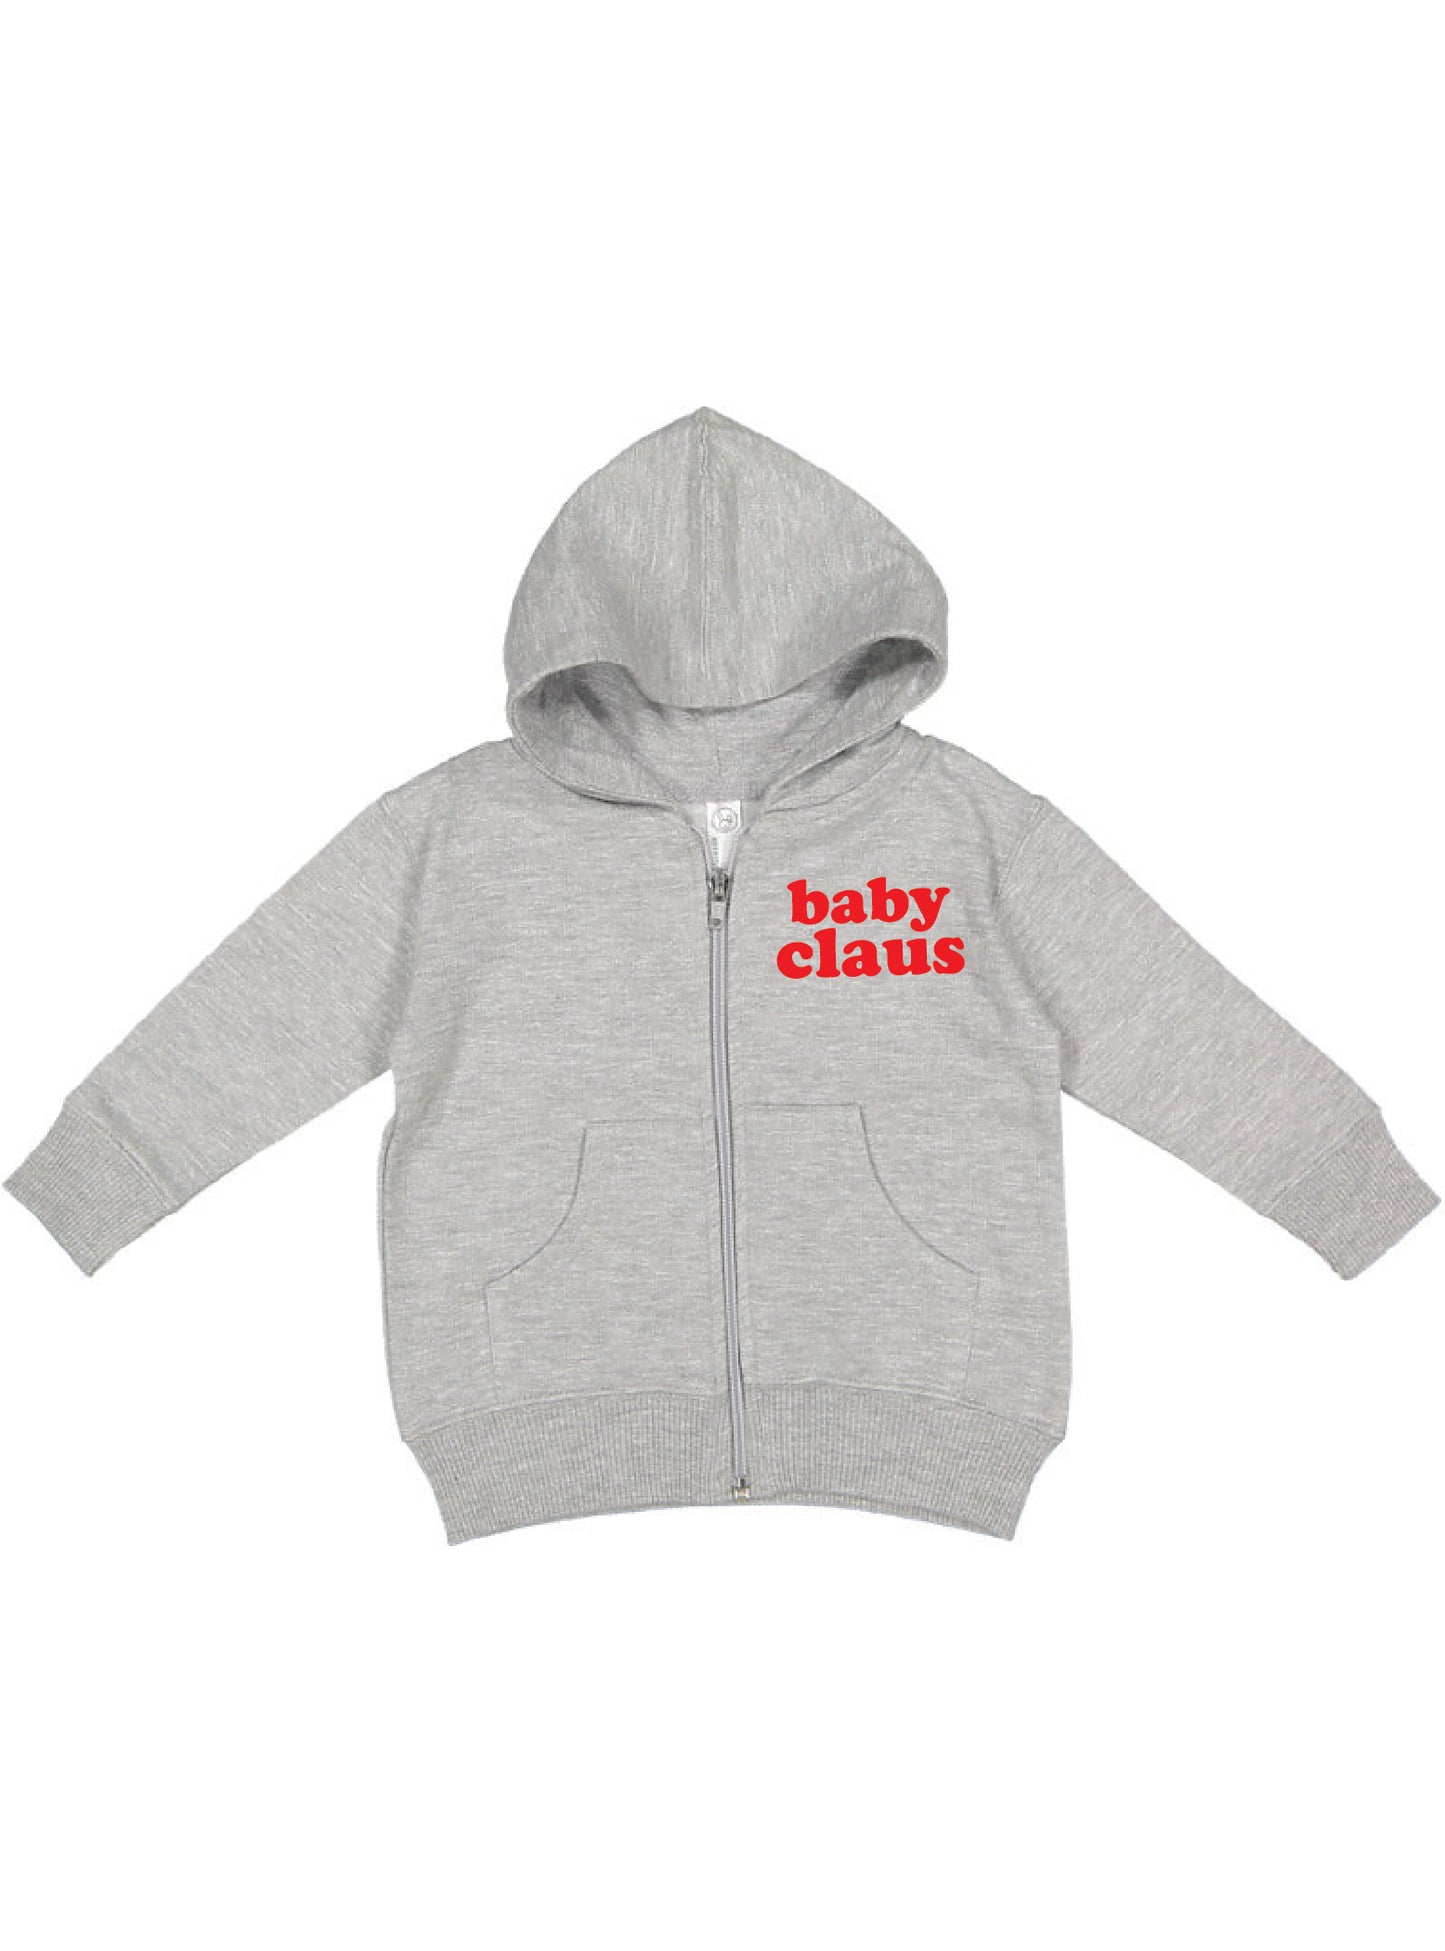 Baby Claus Shirt or Sweatshirt